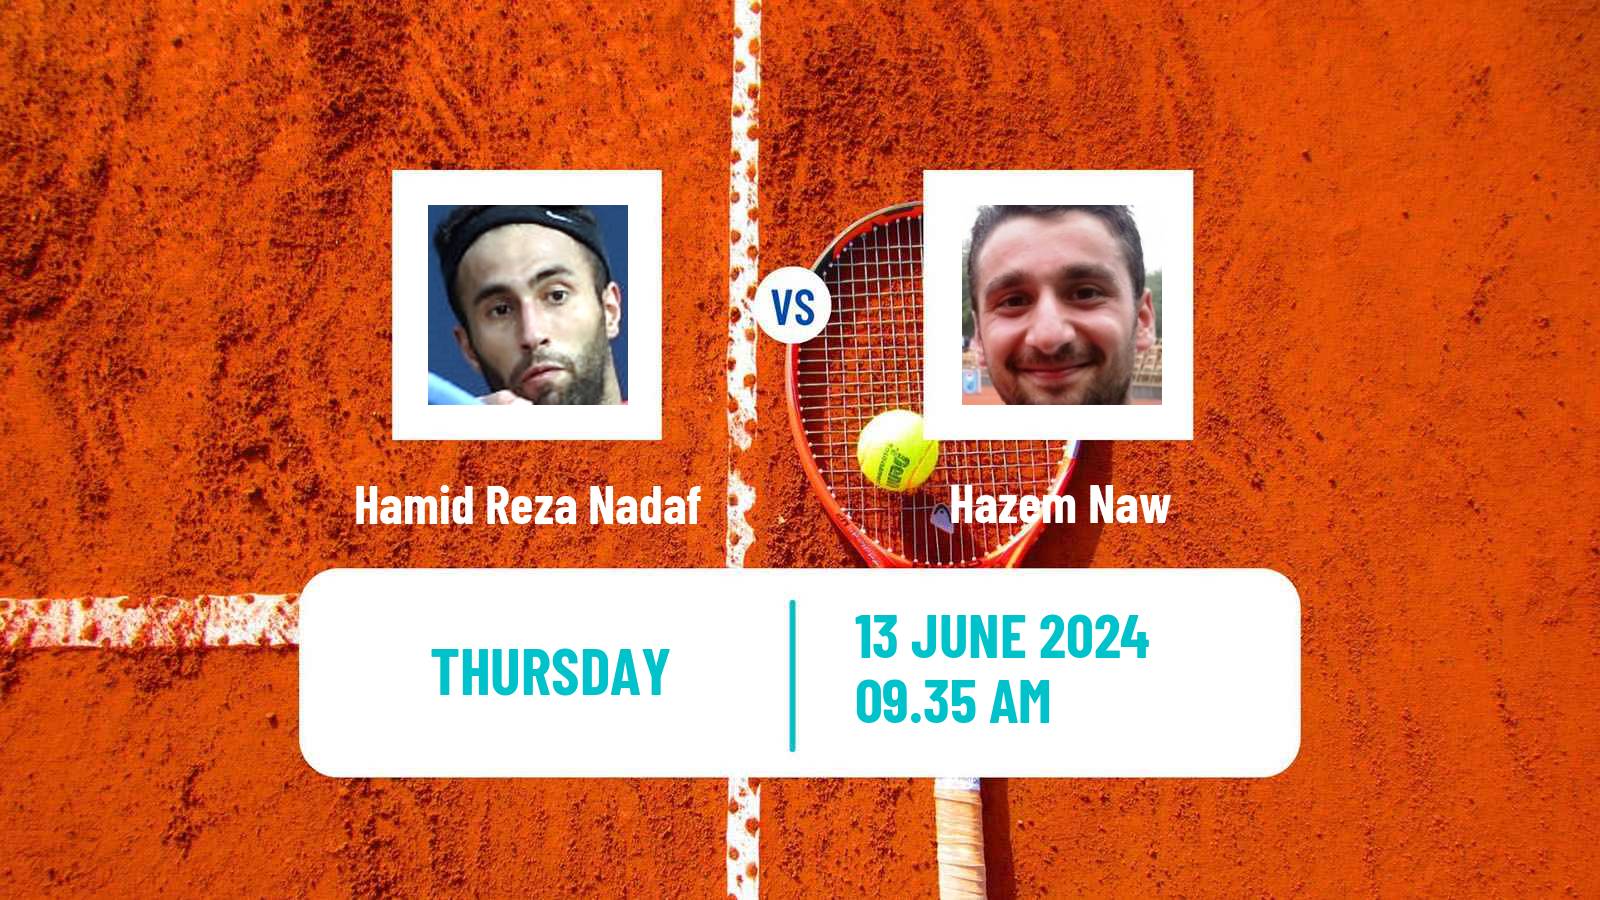 Tennis Davis Cup Group III Hamid Reza Nadaf - Hazem Naw